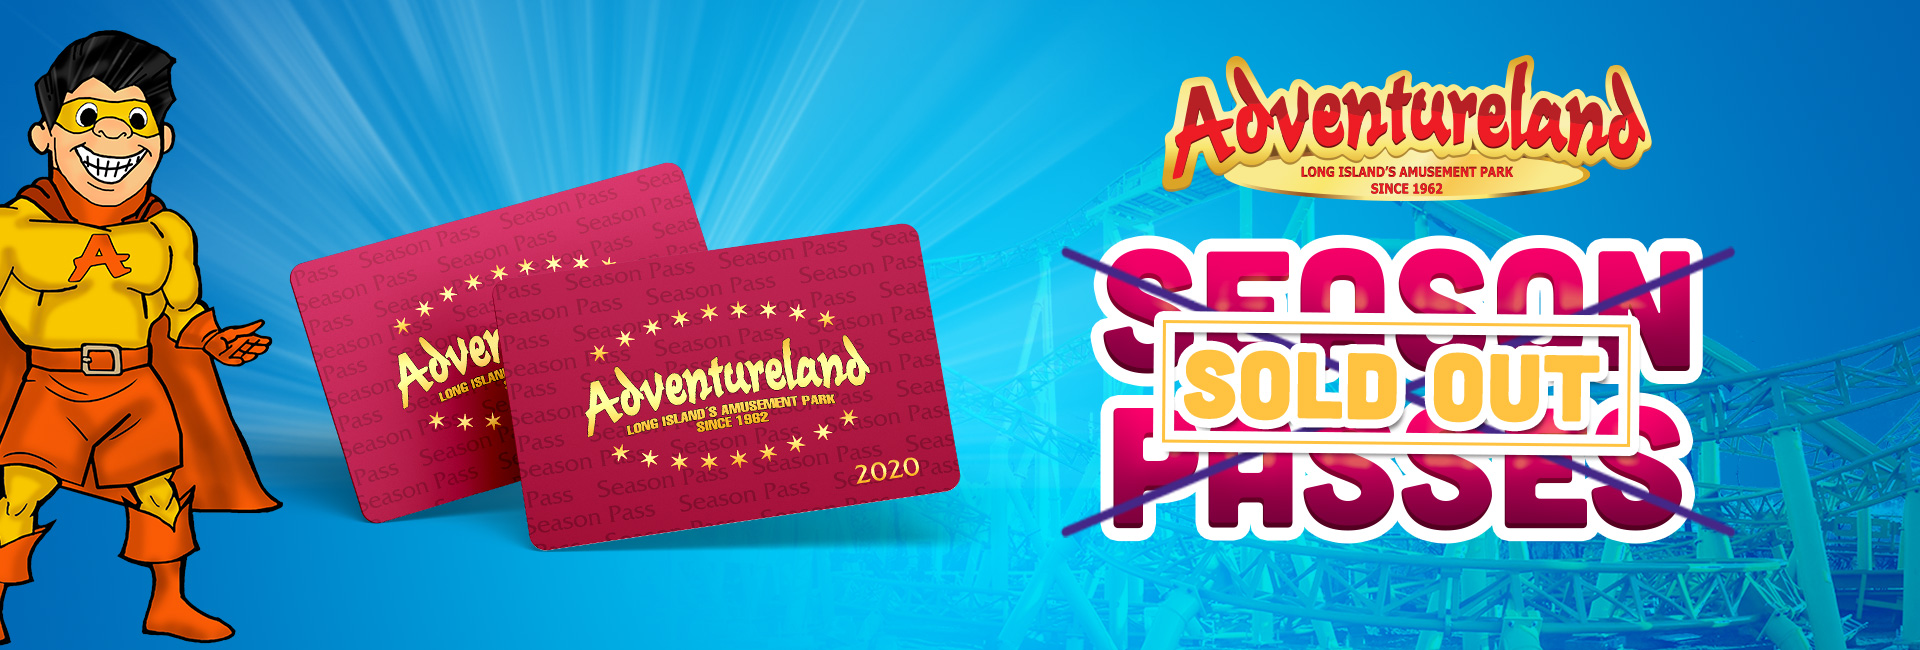 Adventureland Season Passes Adventureland Amusement Park Long Island